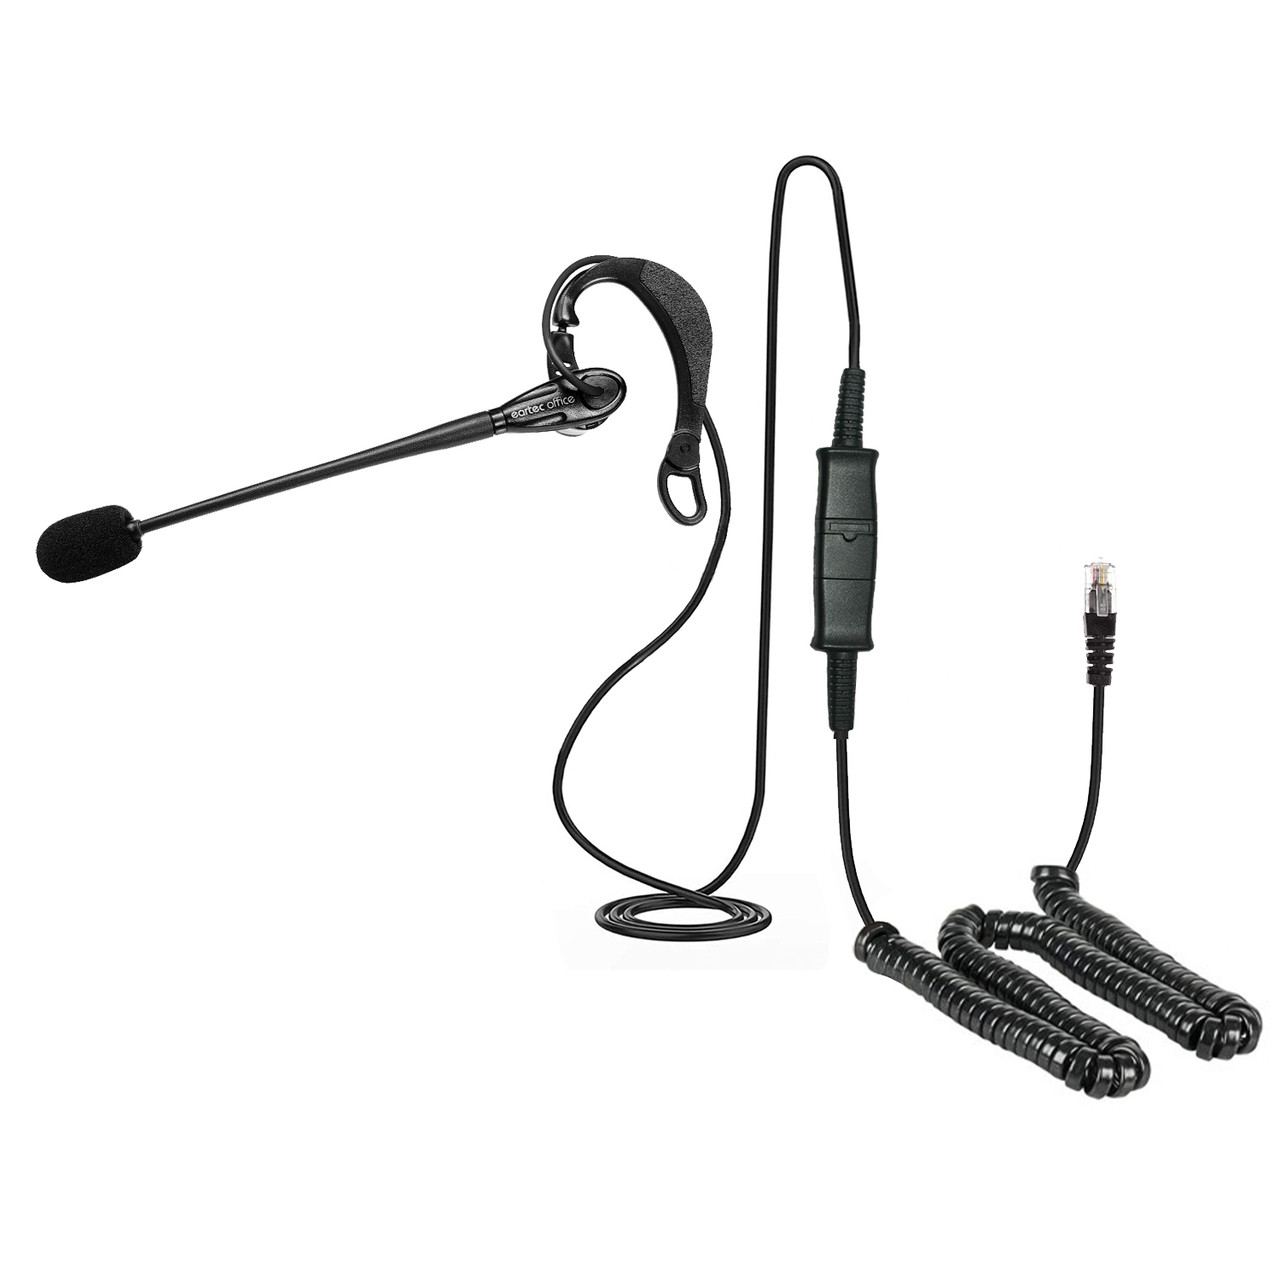 Mitel 6735i SIP Phone In-the-ear Headset - EAR200